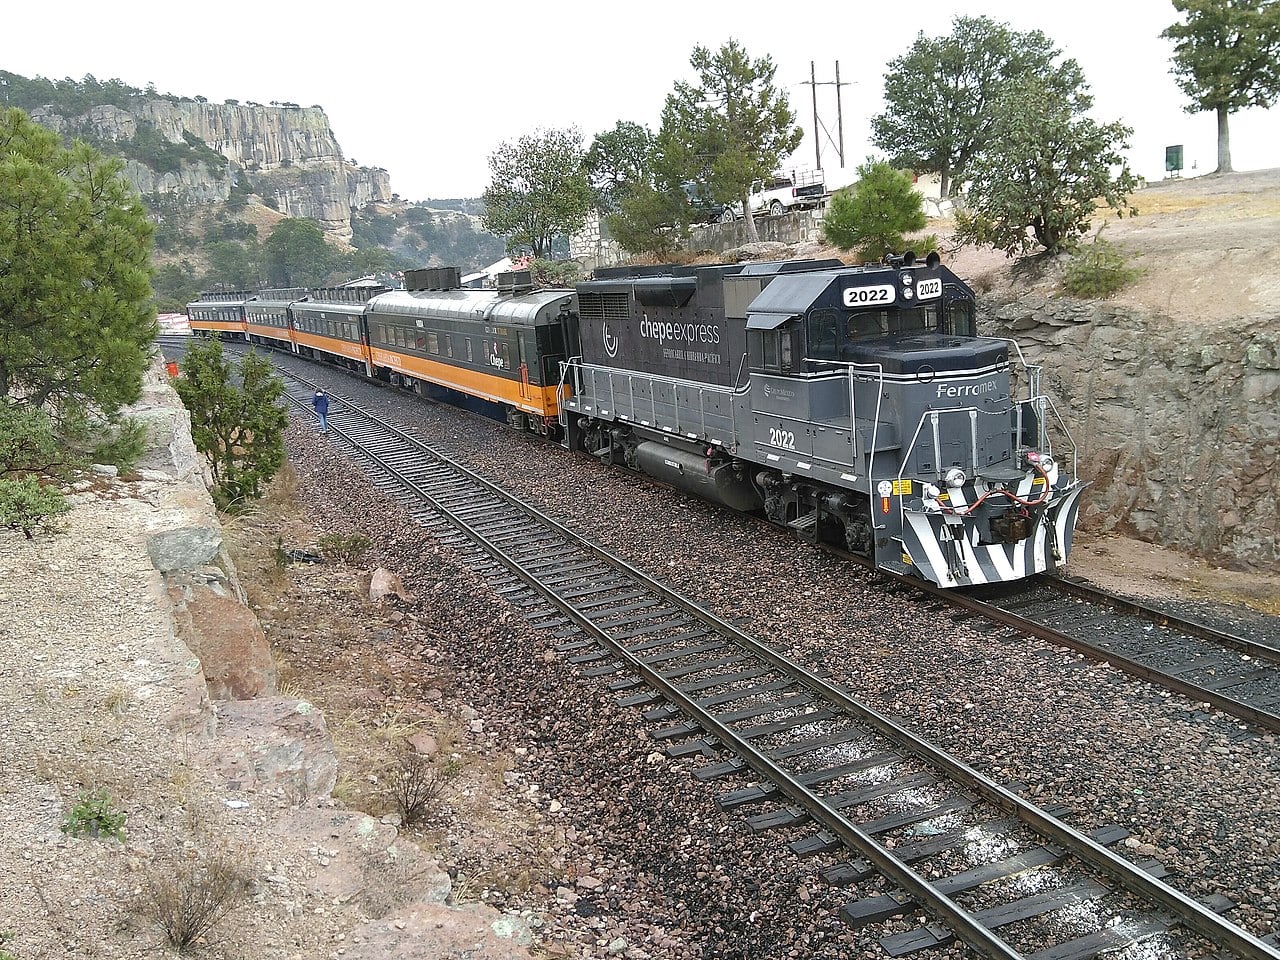 Copper Canyon Railroad